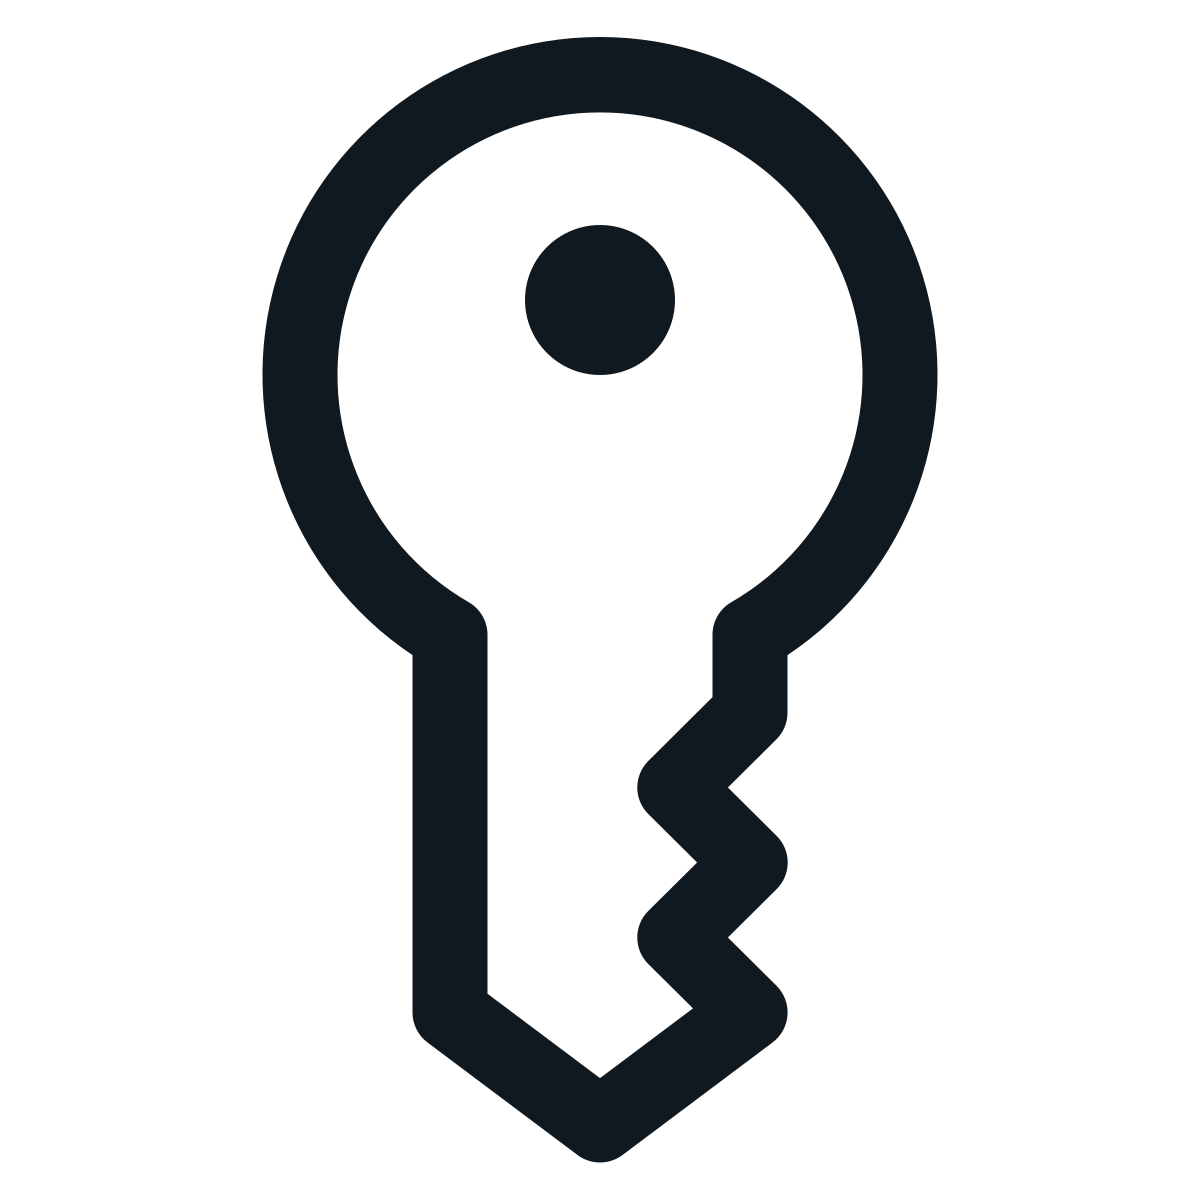 Ключ символ. Значок ключа. Пиктограмма ключ. Значок беспроводного ключа.